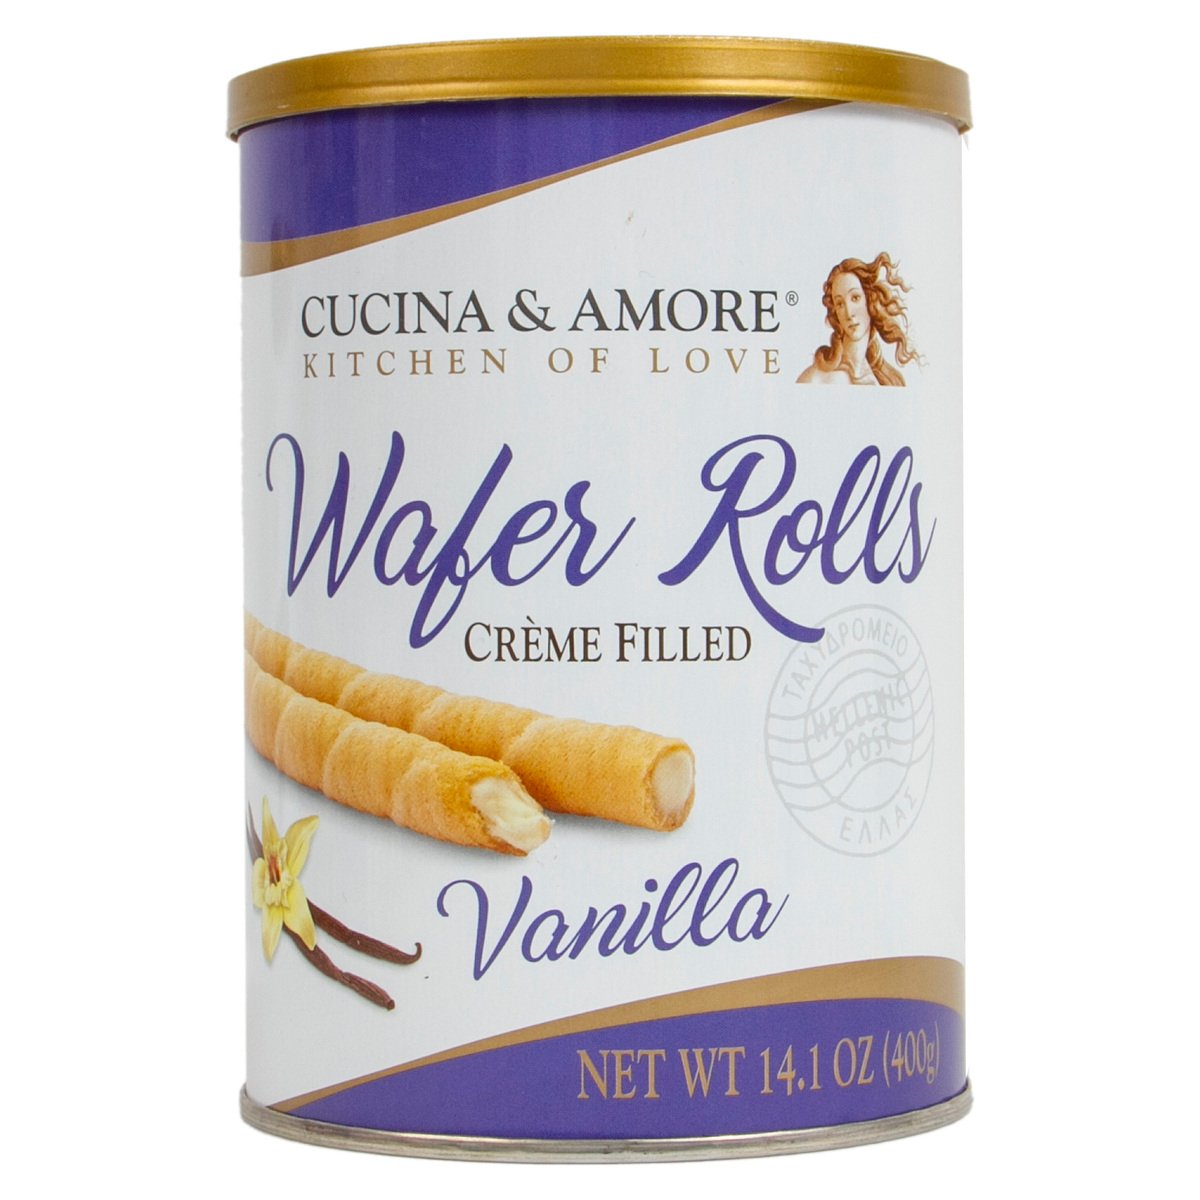 Cucina & Amore Creme Filled Wafer Rolls Vanilla 400 g